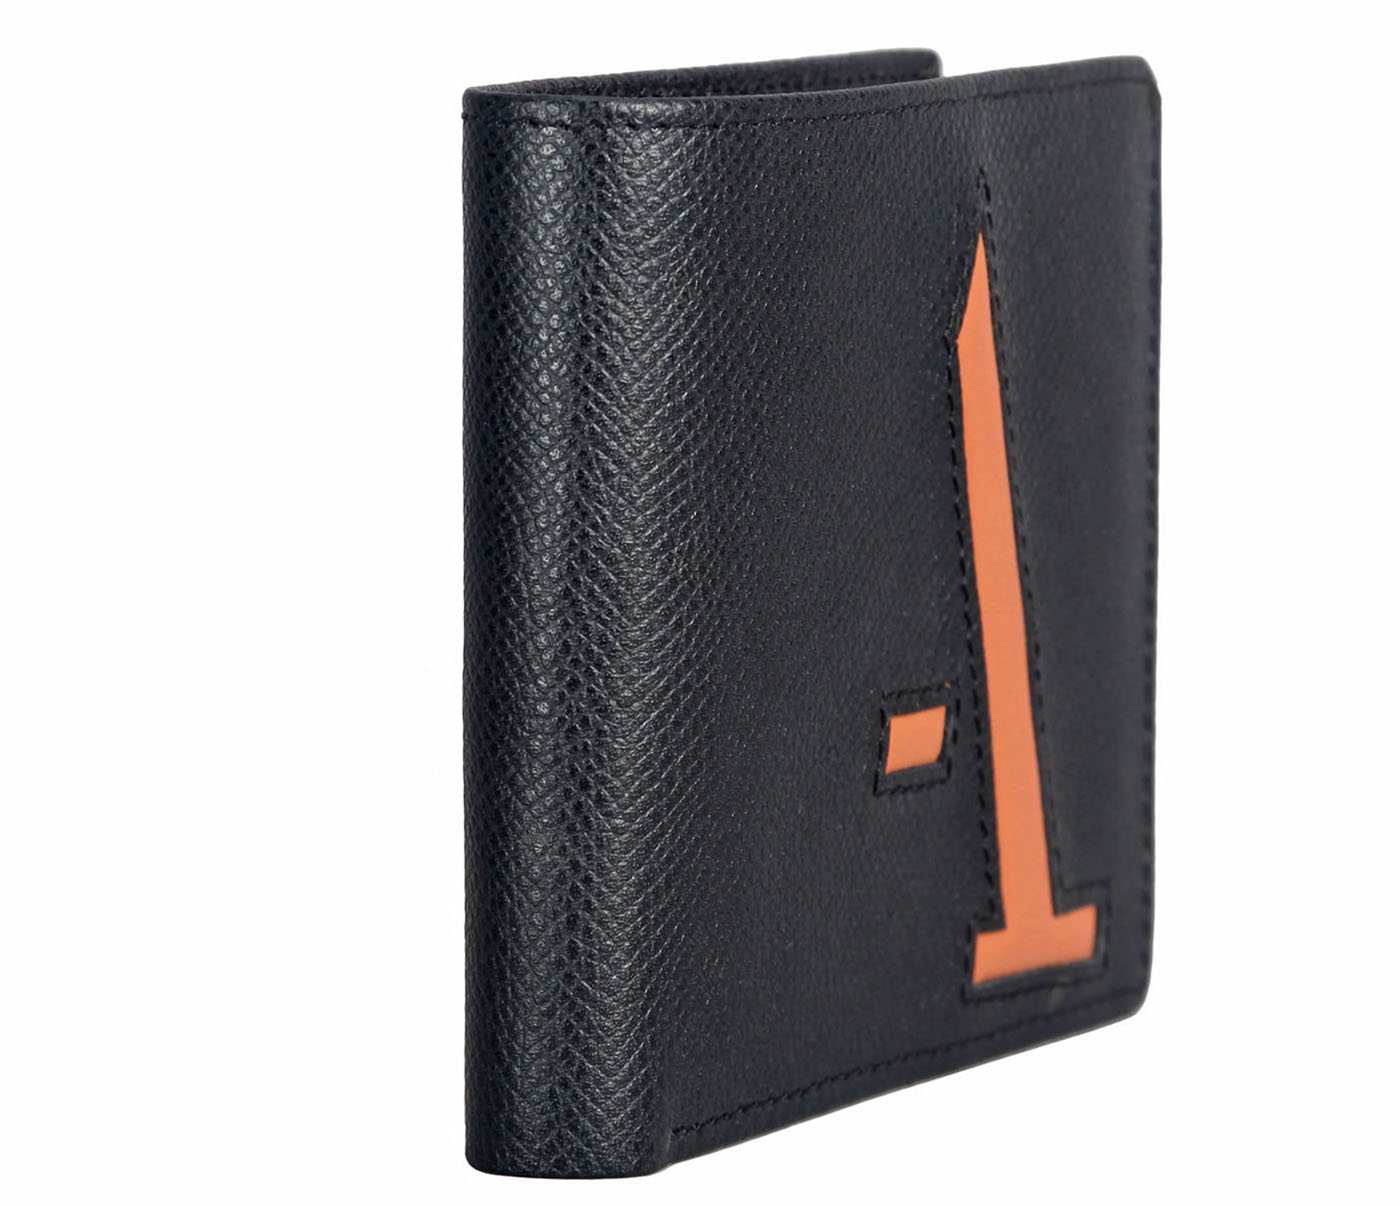 W310-Addler-Men's bifold wallet with coin pocket in Genuine Leather - Black